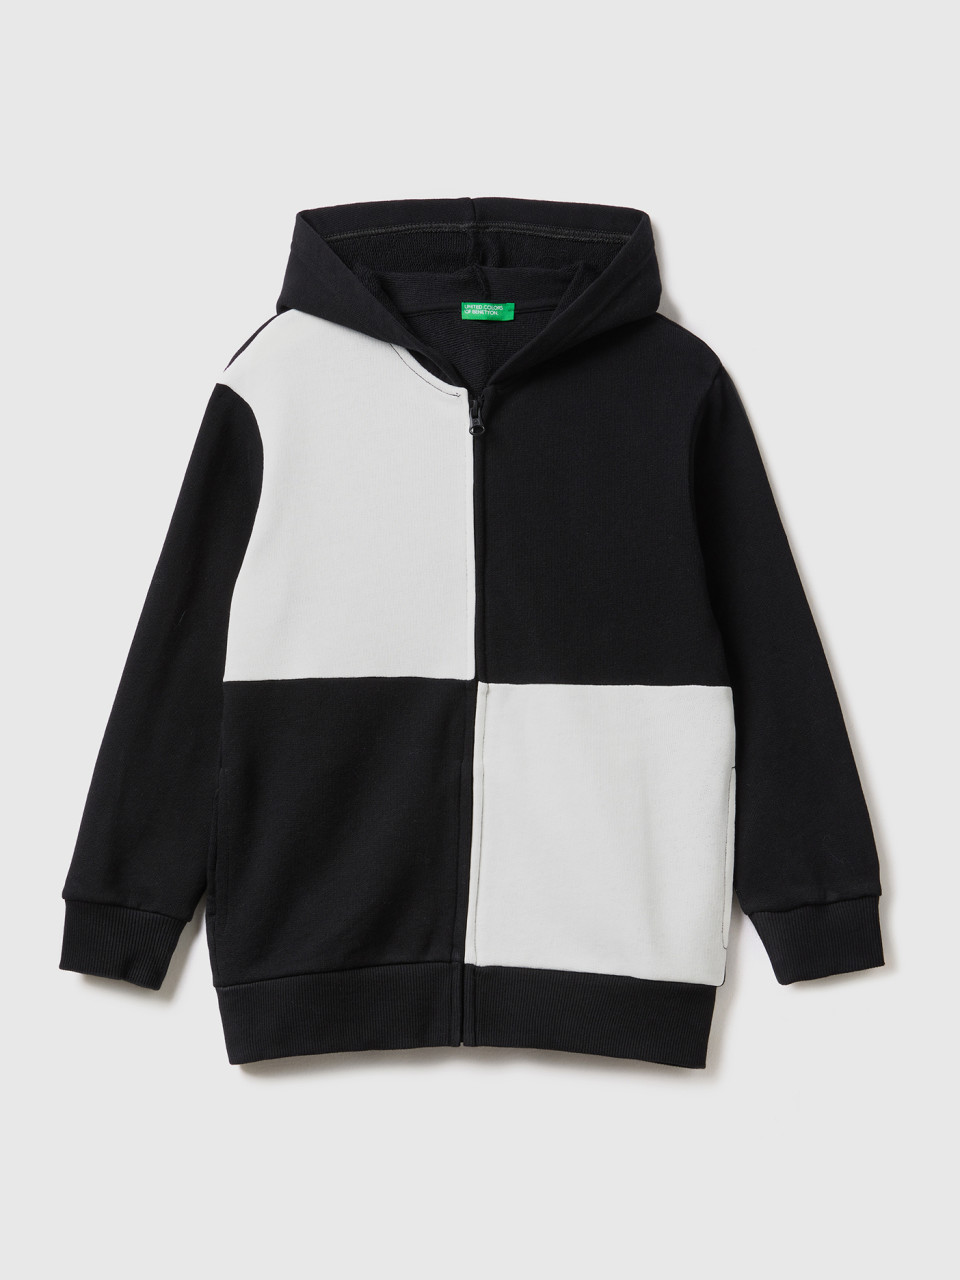 Benetton, Sweatshirt With Maxi Check, Black, Kids